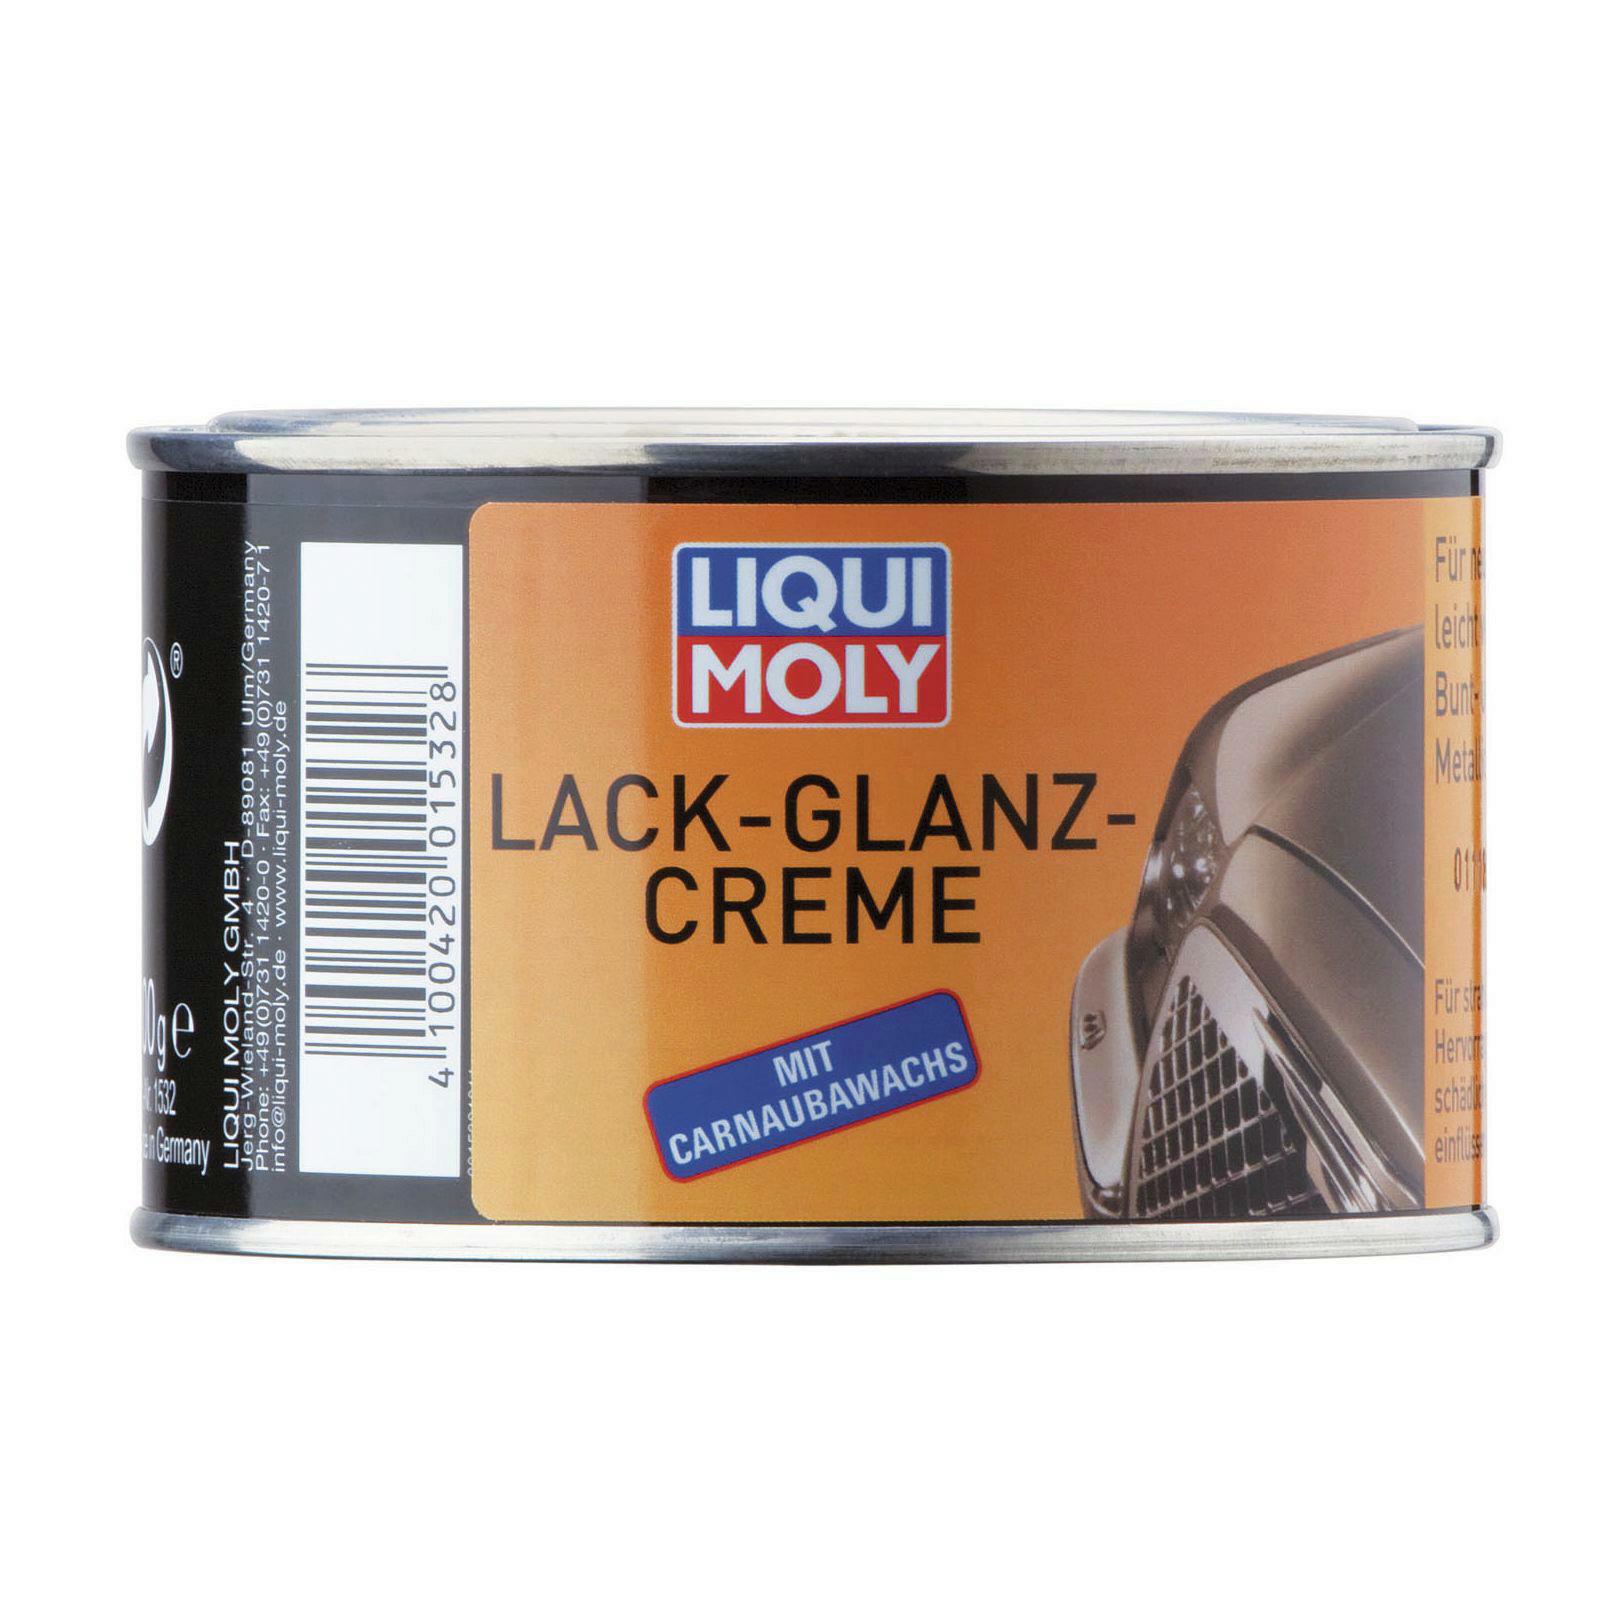 Liqui Moly Lack-Glanz-Creme 300g